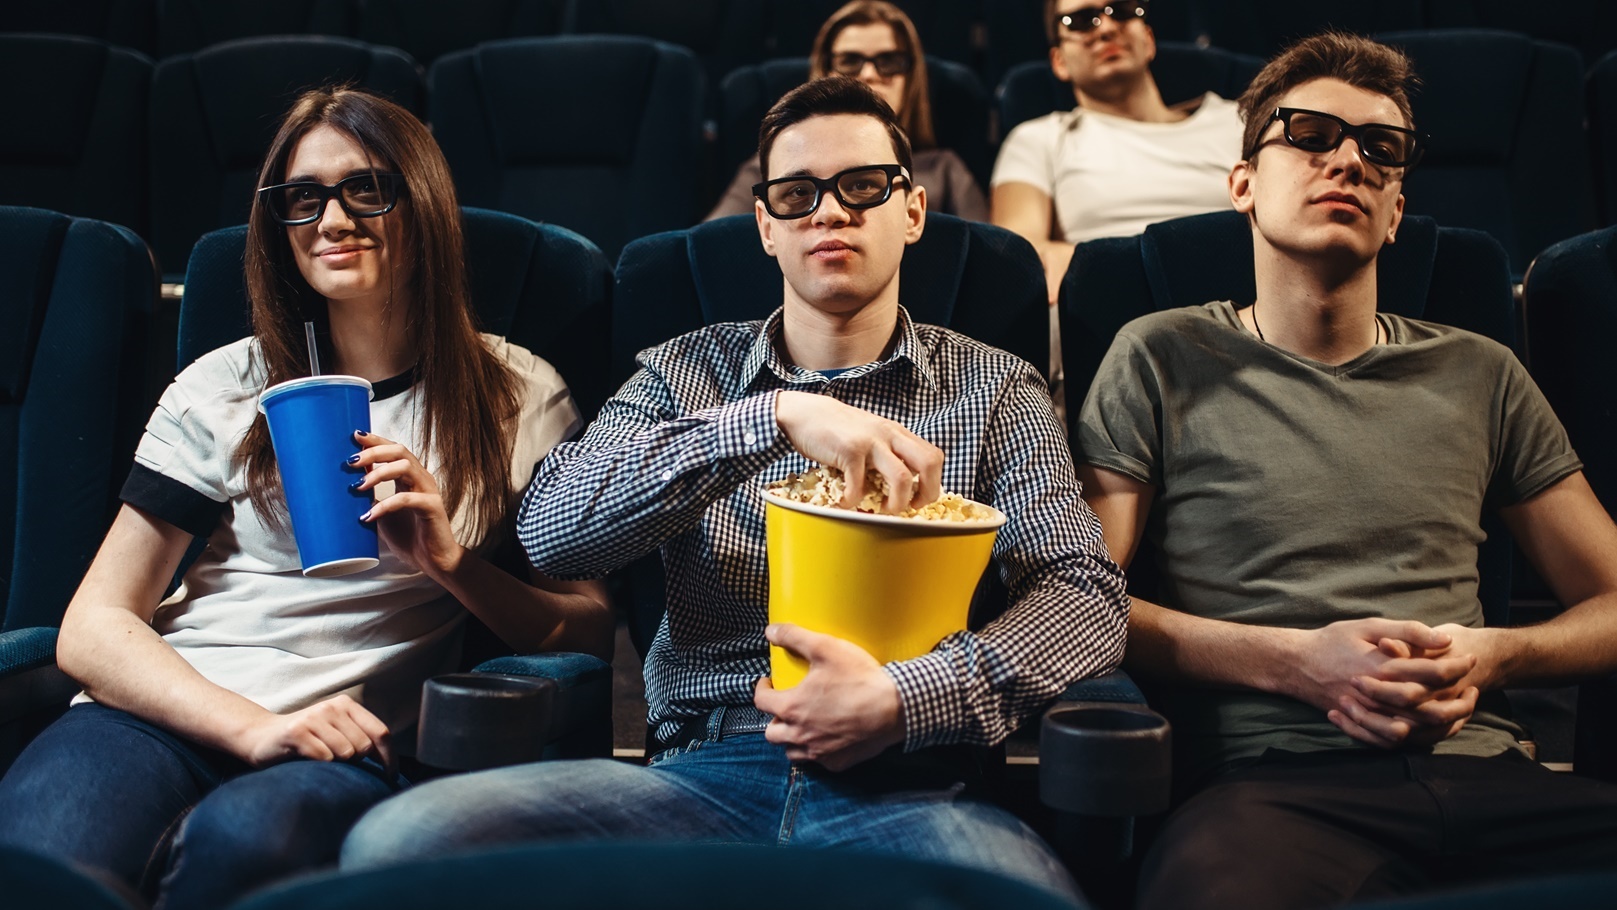 people-with-popcorn-watching-movie-in-cinema-2021-08-26-16-26-29-utc